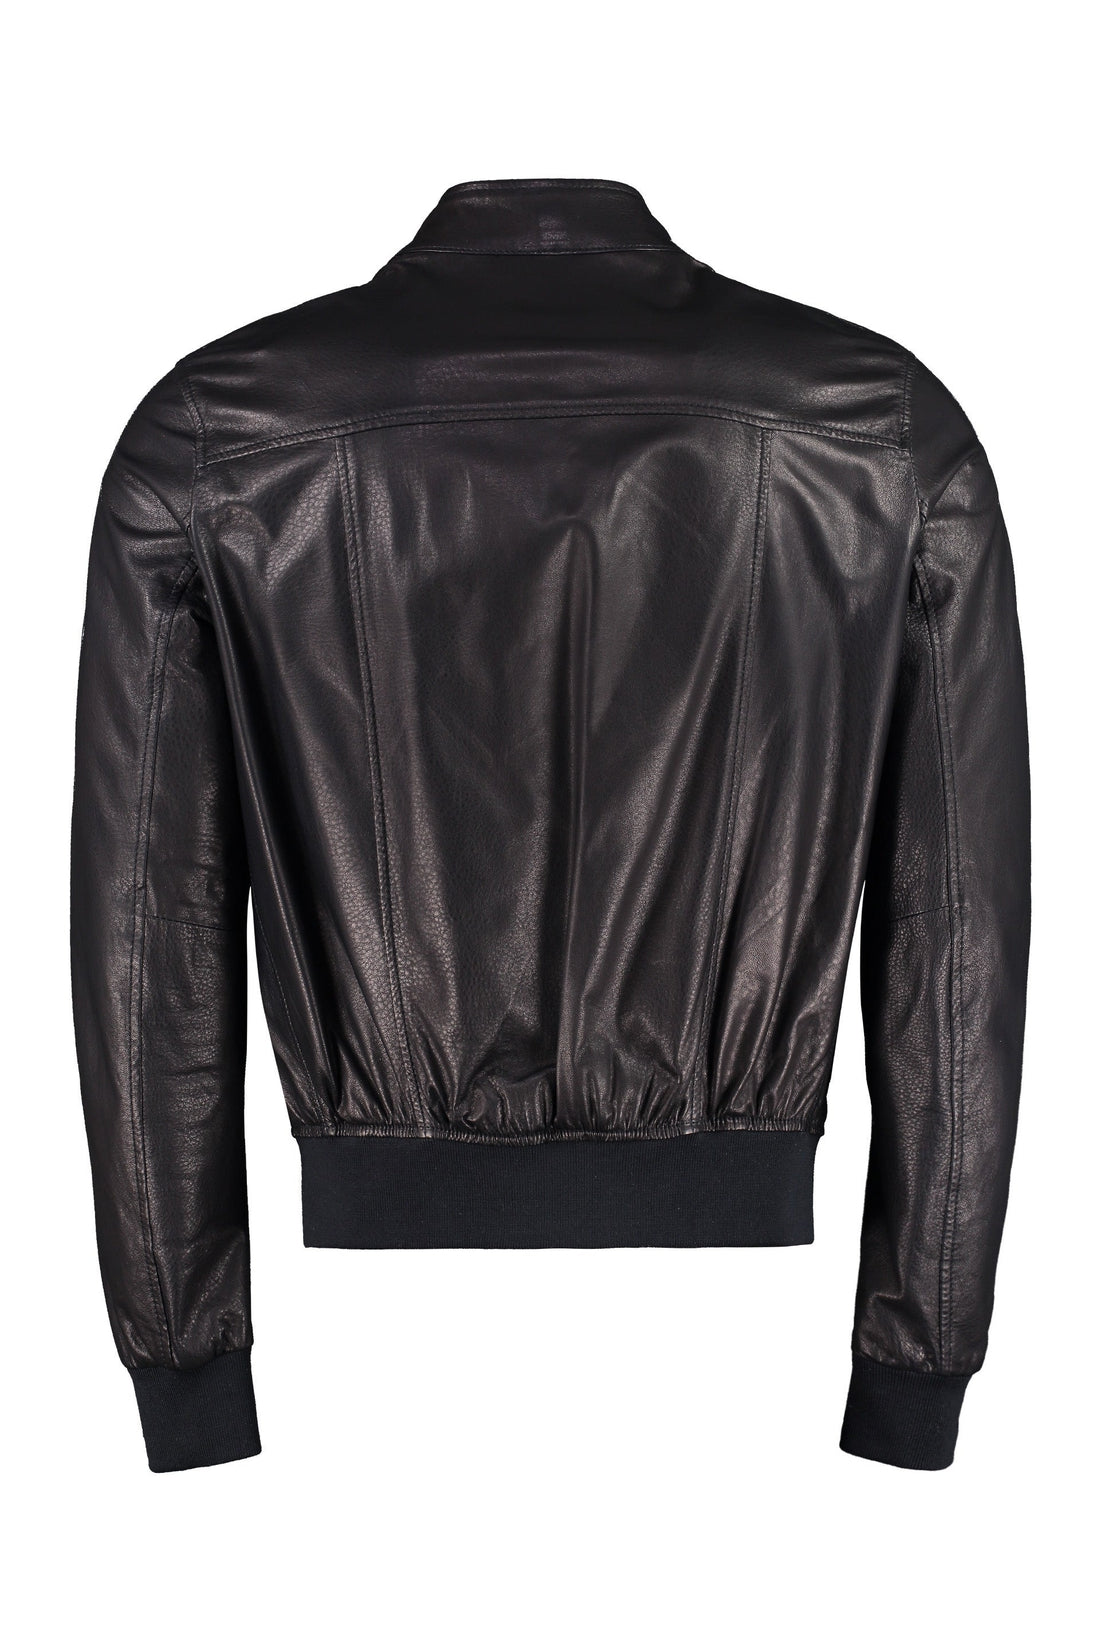 Tagliatore-OUTLET-SALE-Leather jacket-ARCHIVIST